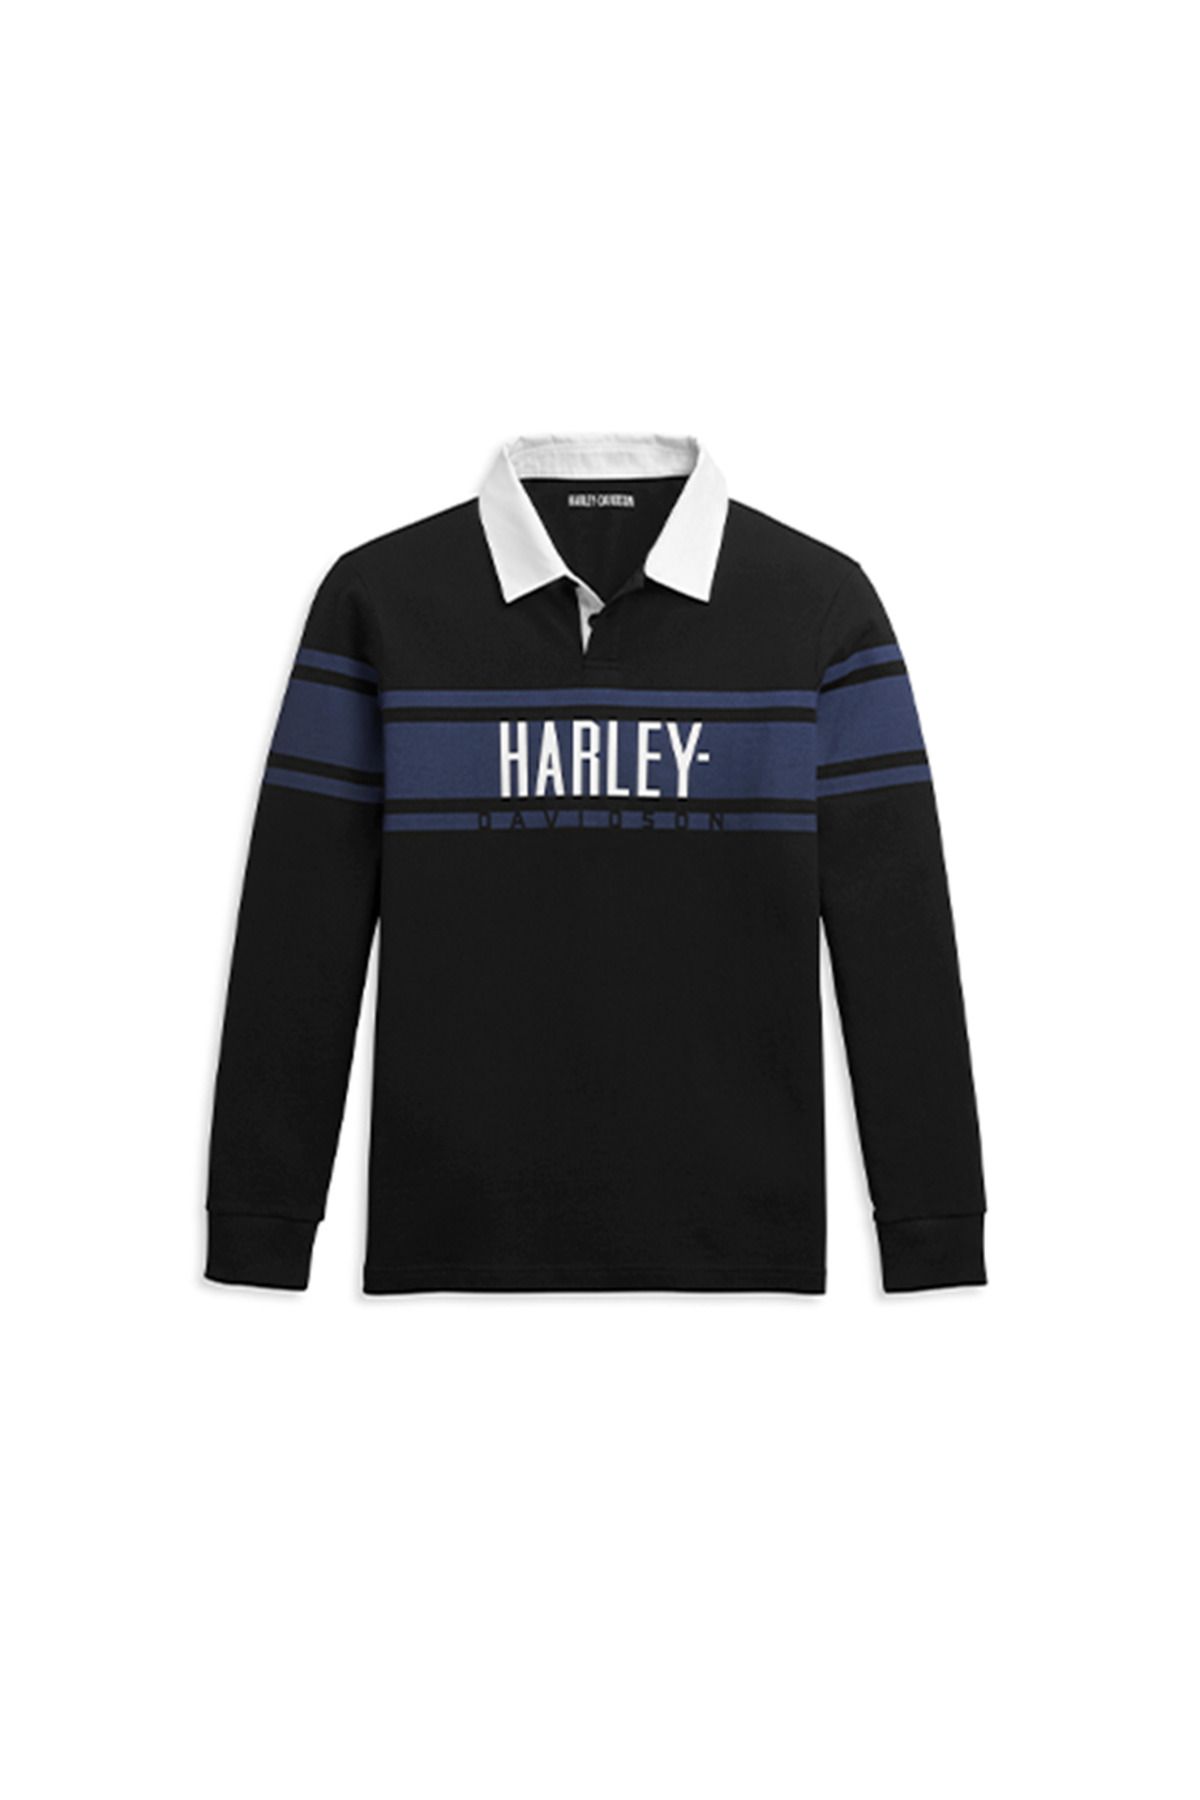 Harley Davidson Harley-davidson Tee-knit, Black